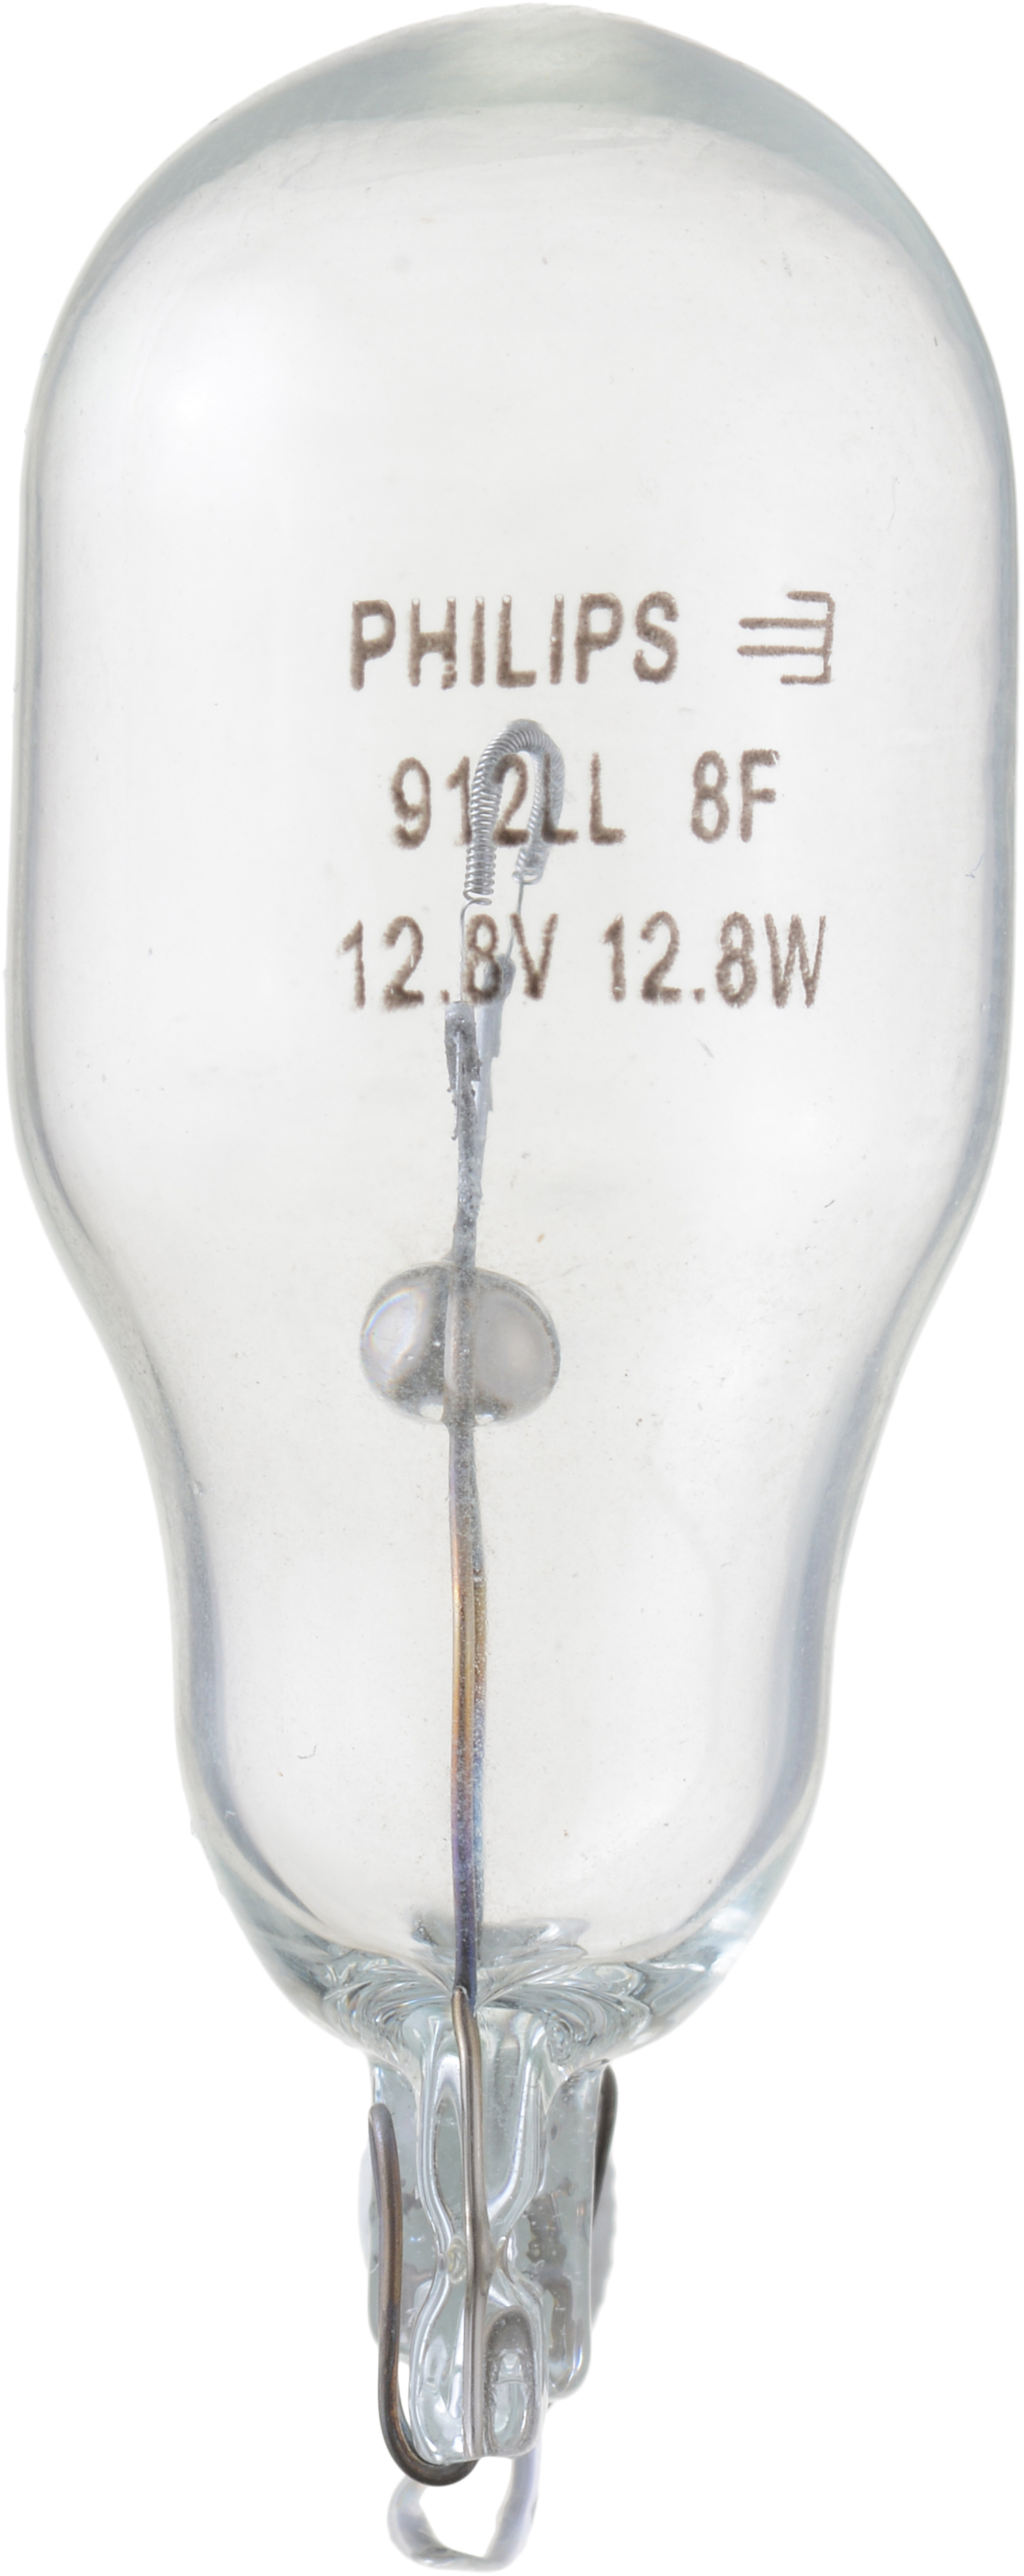 Picture of Philips 912LLB2 Longerlife Mini Bulb